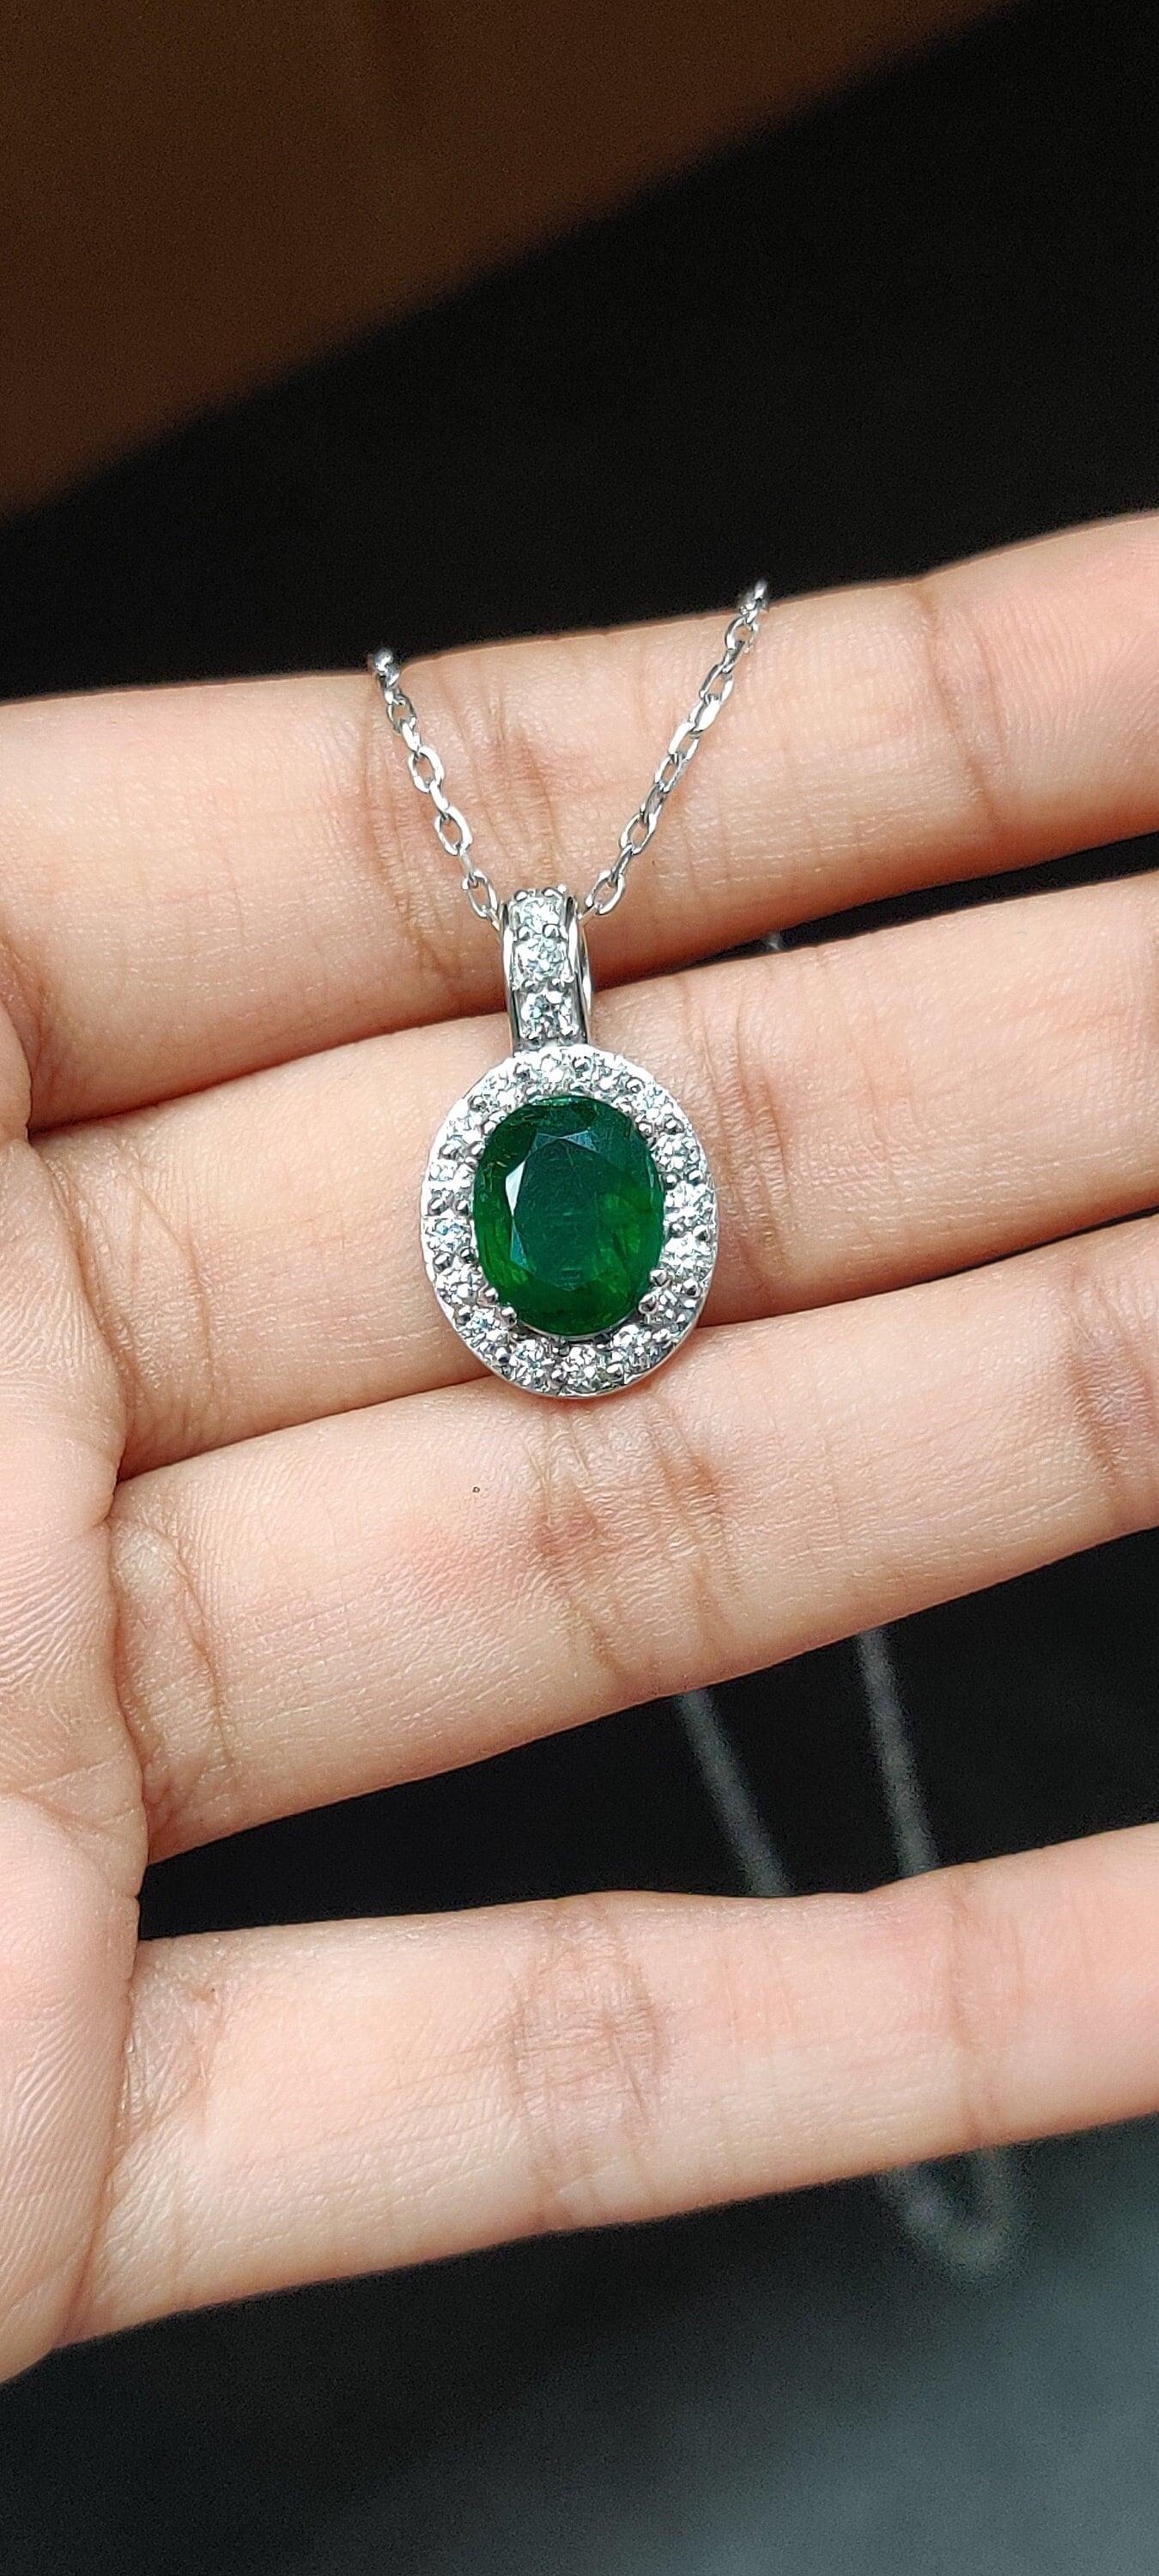 2.14 Ct Zambian Emerald Pendant with Halo Diamonds in 18K Gold 2